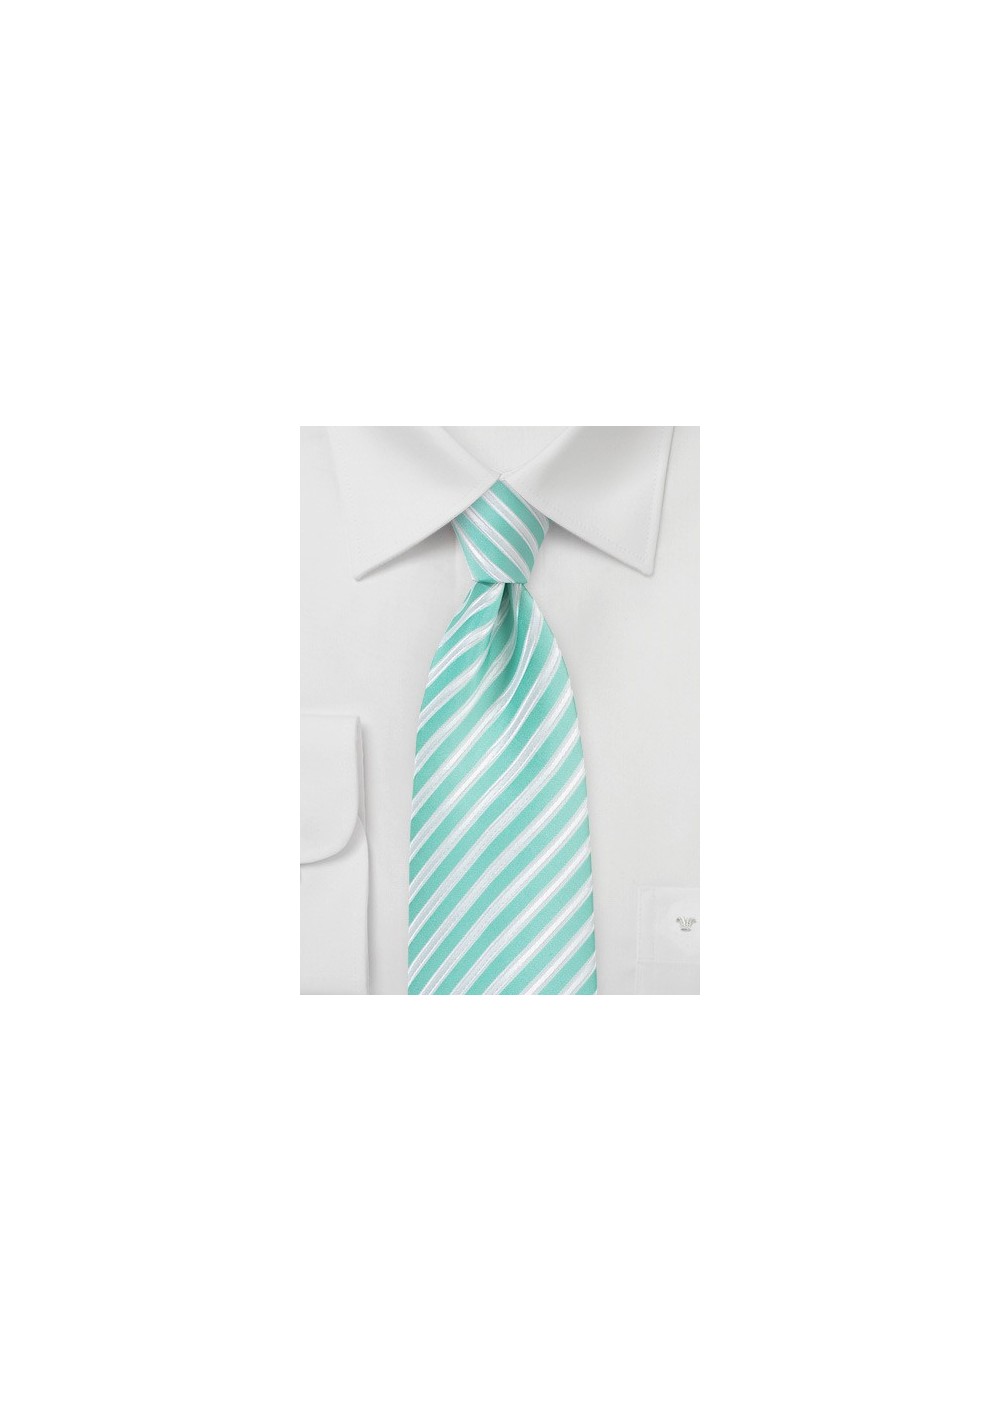 Pool Blue Tie with White Stripes